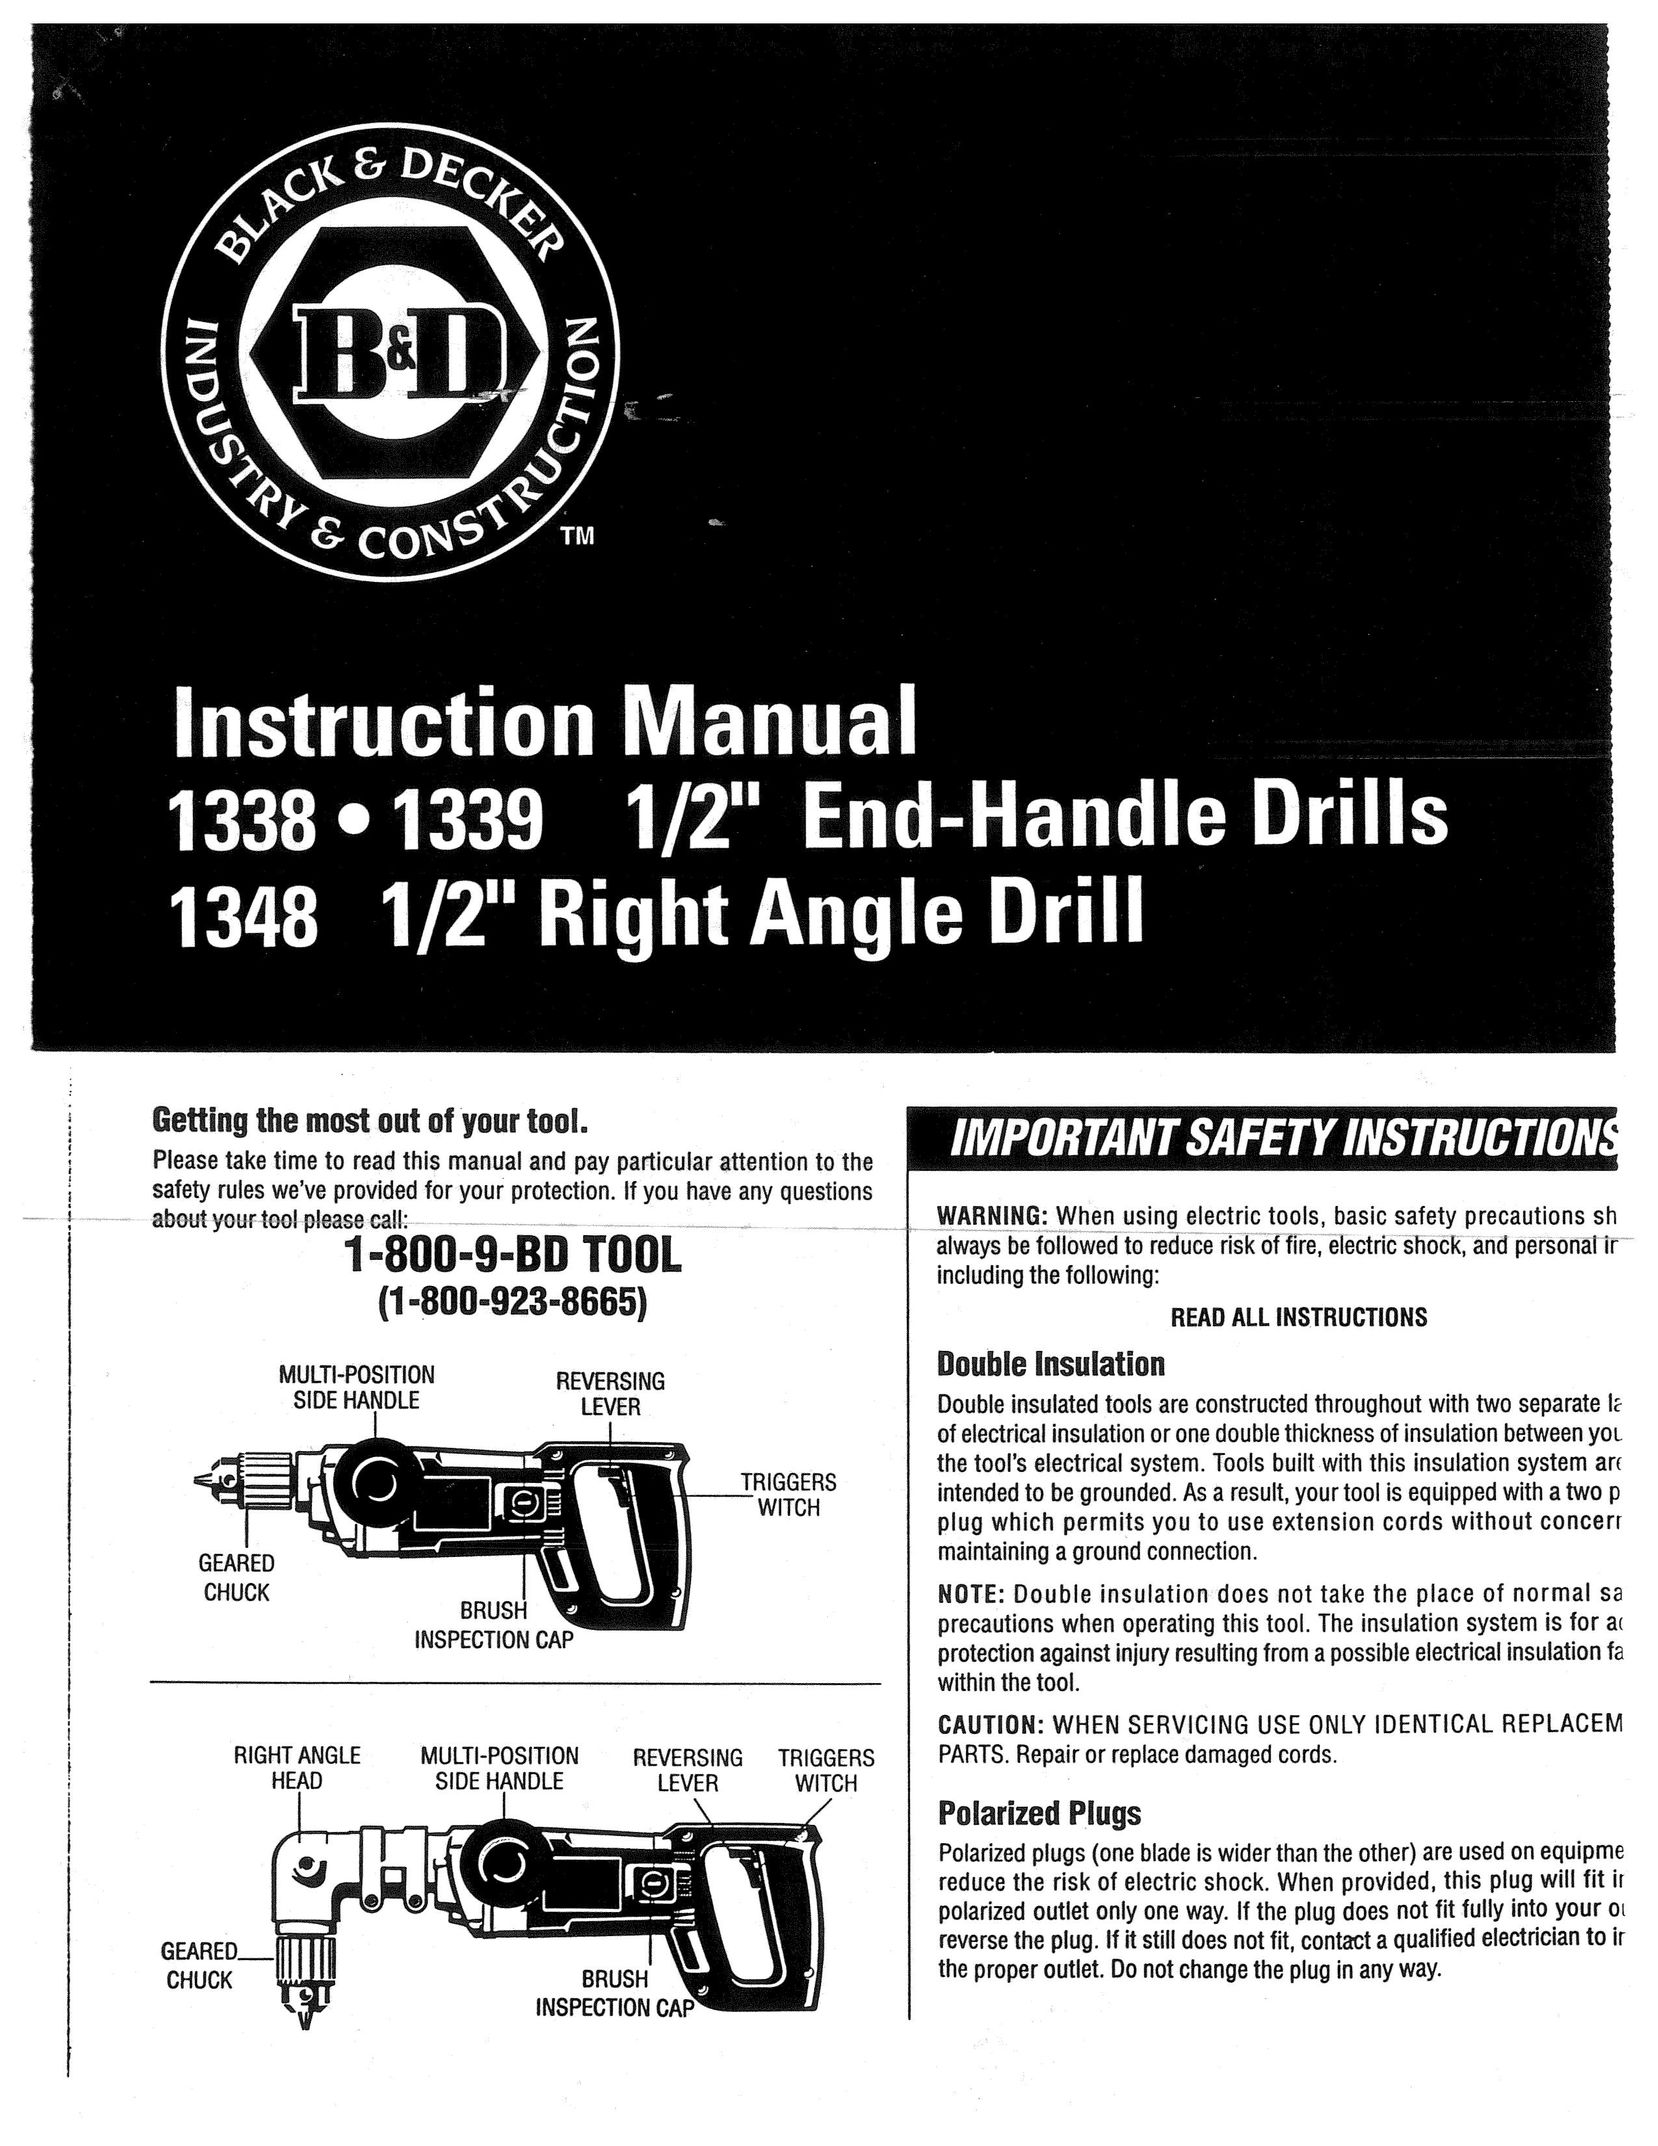 Black & Decker 1339 Drill User Manual